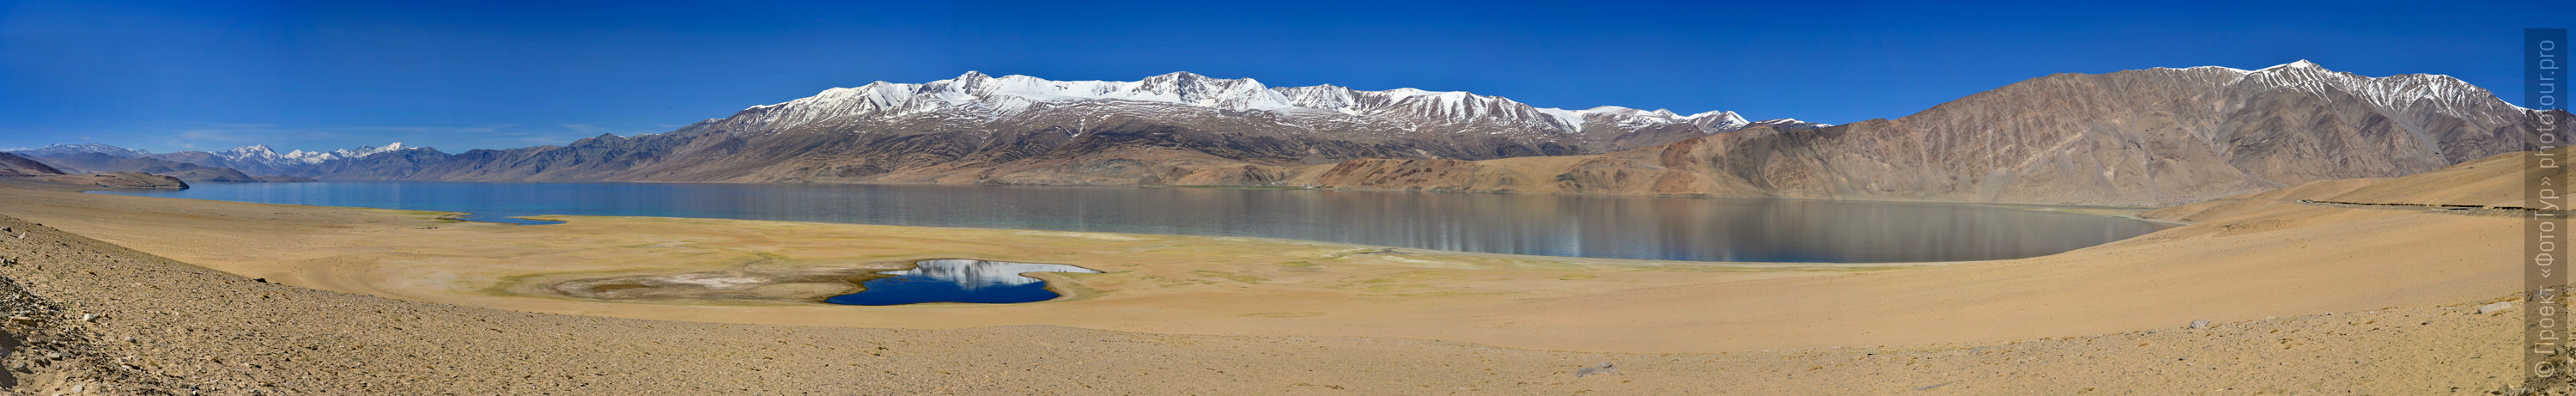 Фототур в Тибет: фото озера Цо Морири, июнь 2014 года.